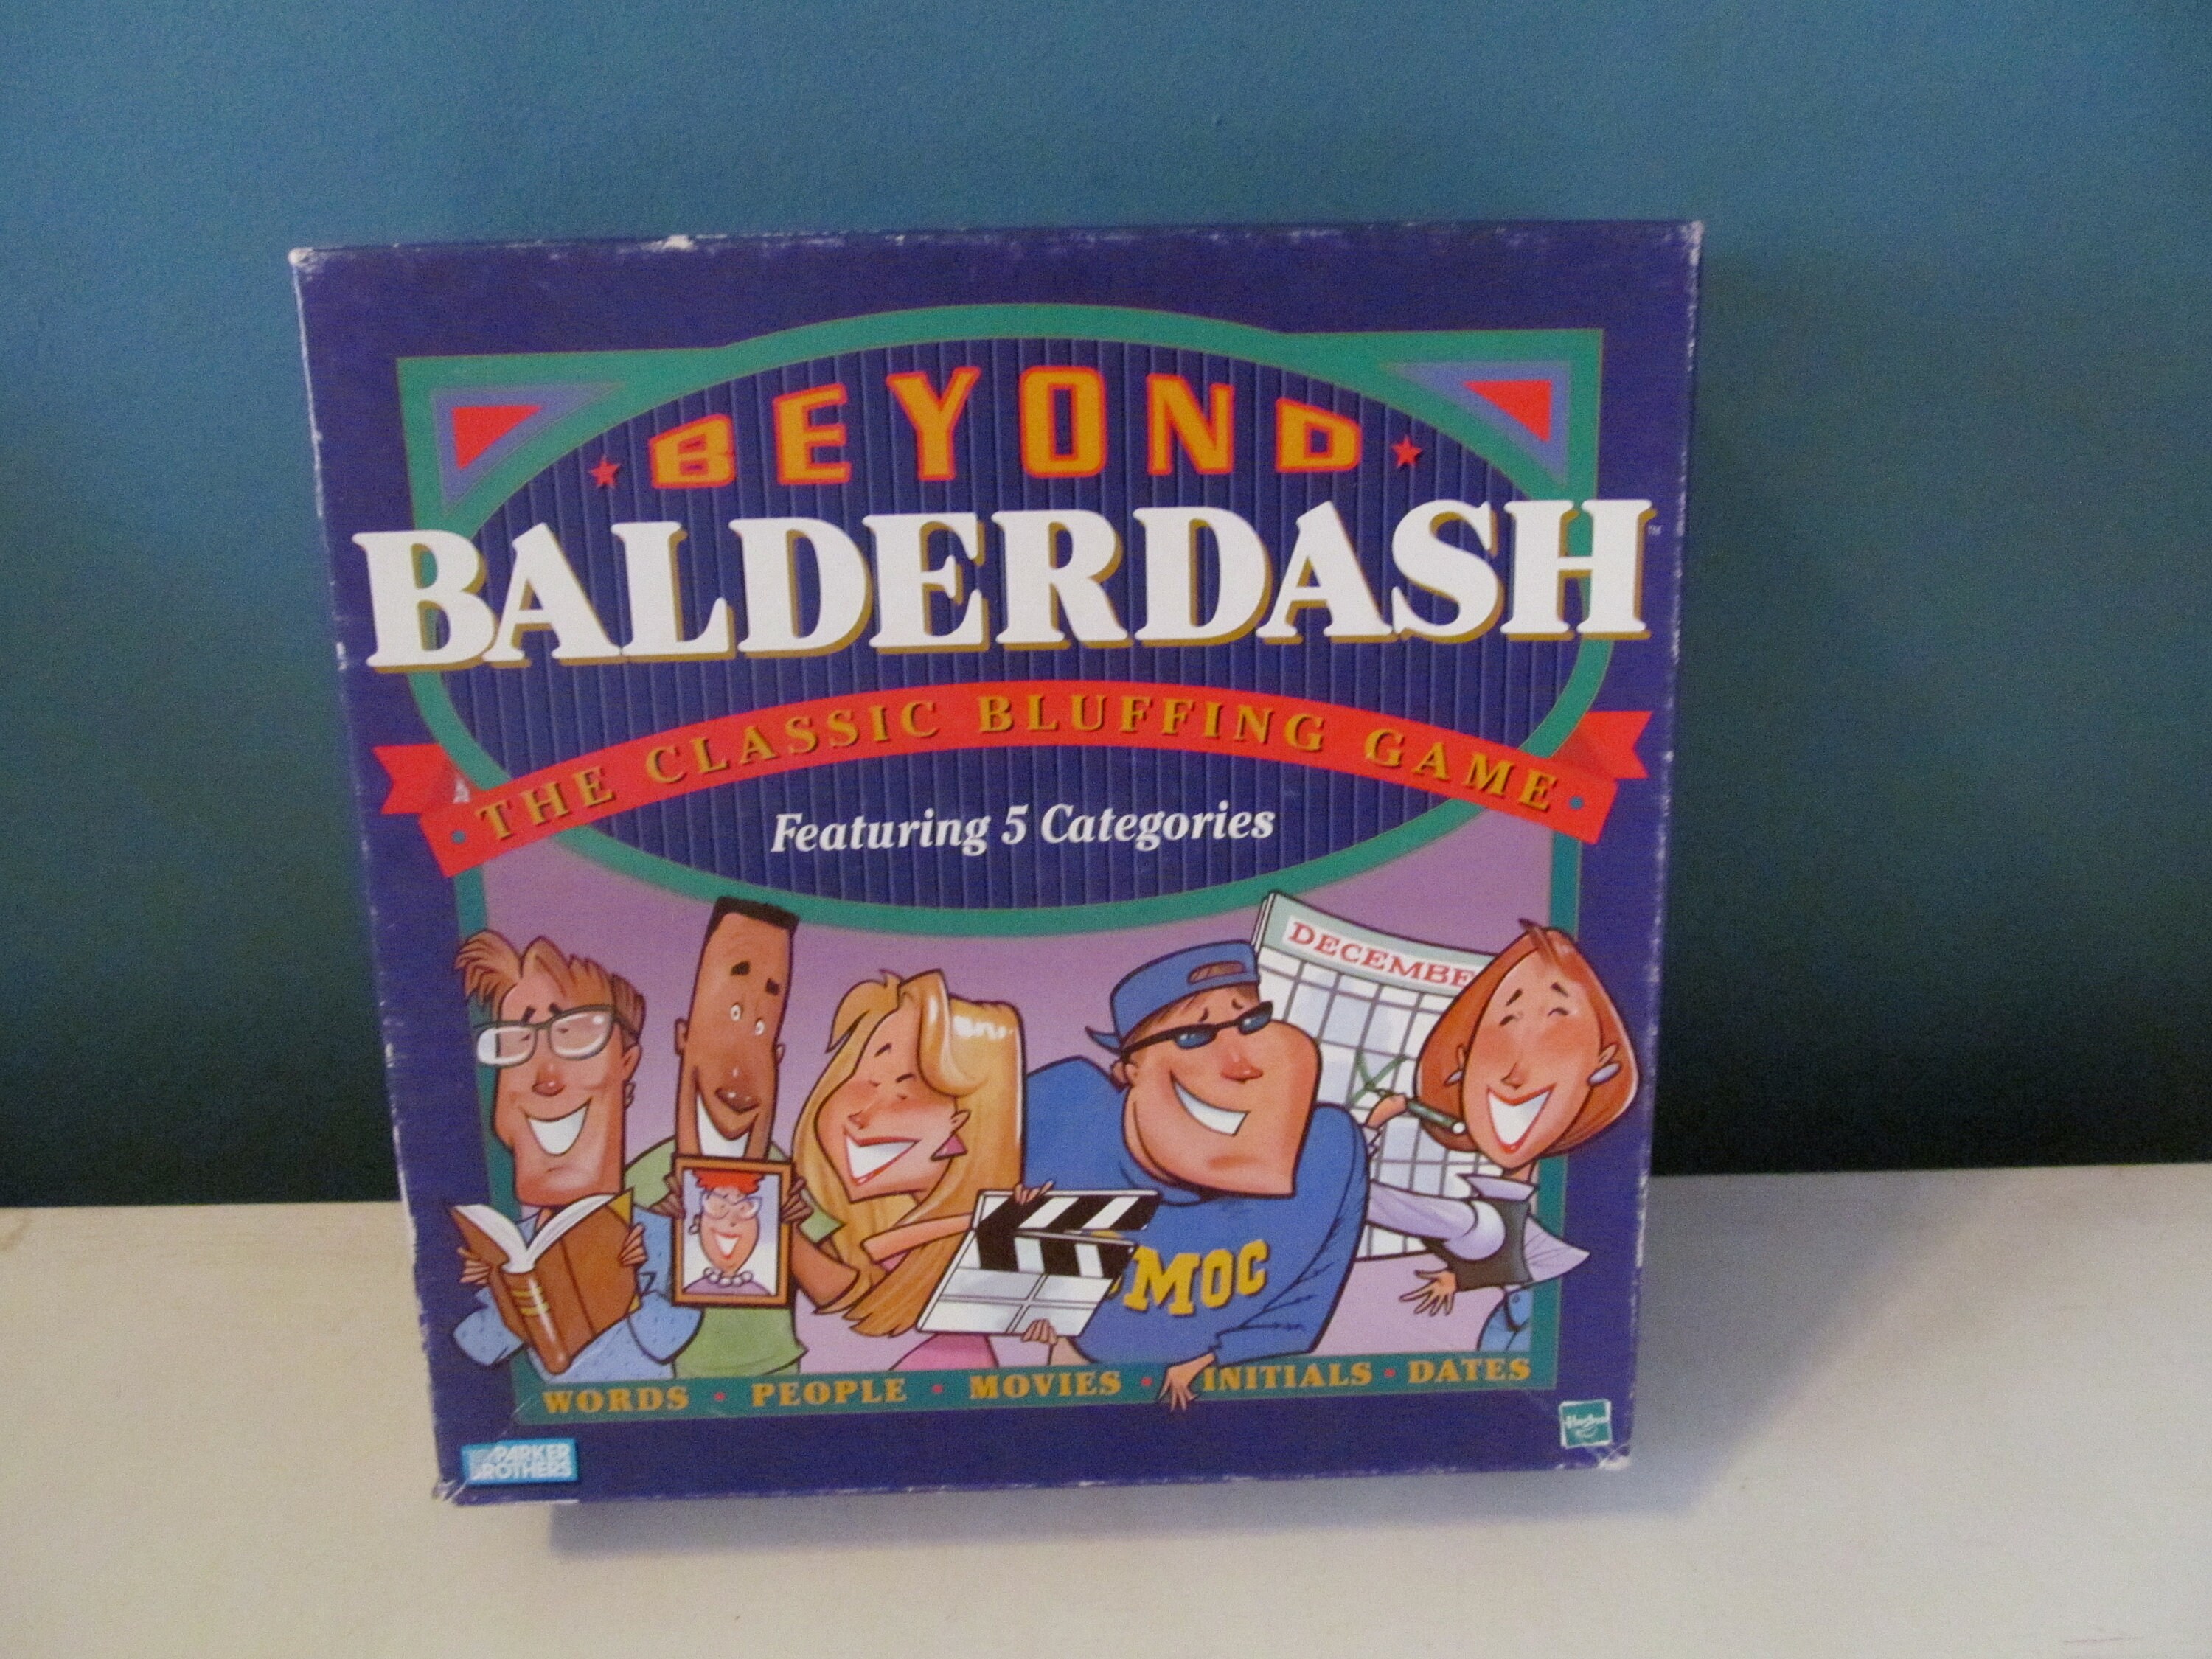 Balderdash the Bluffing Board Game 1995 read Description 